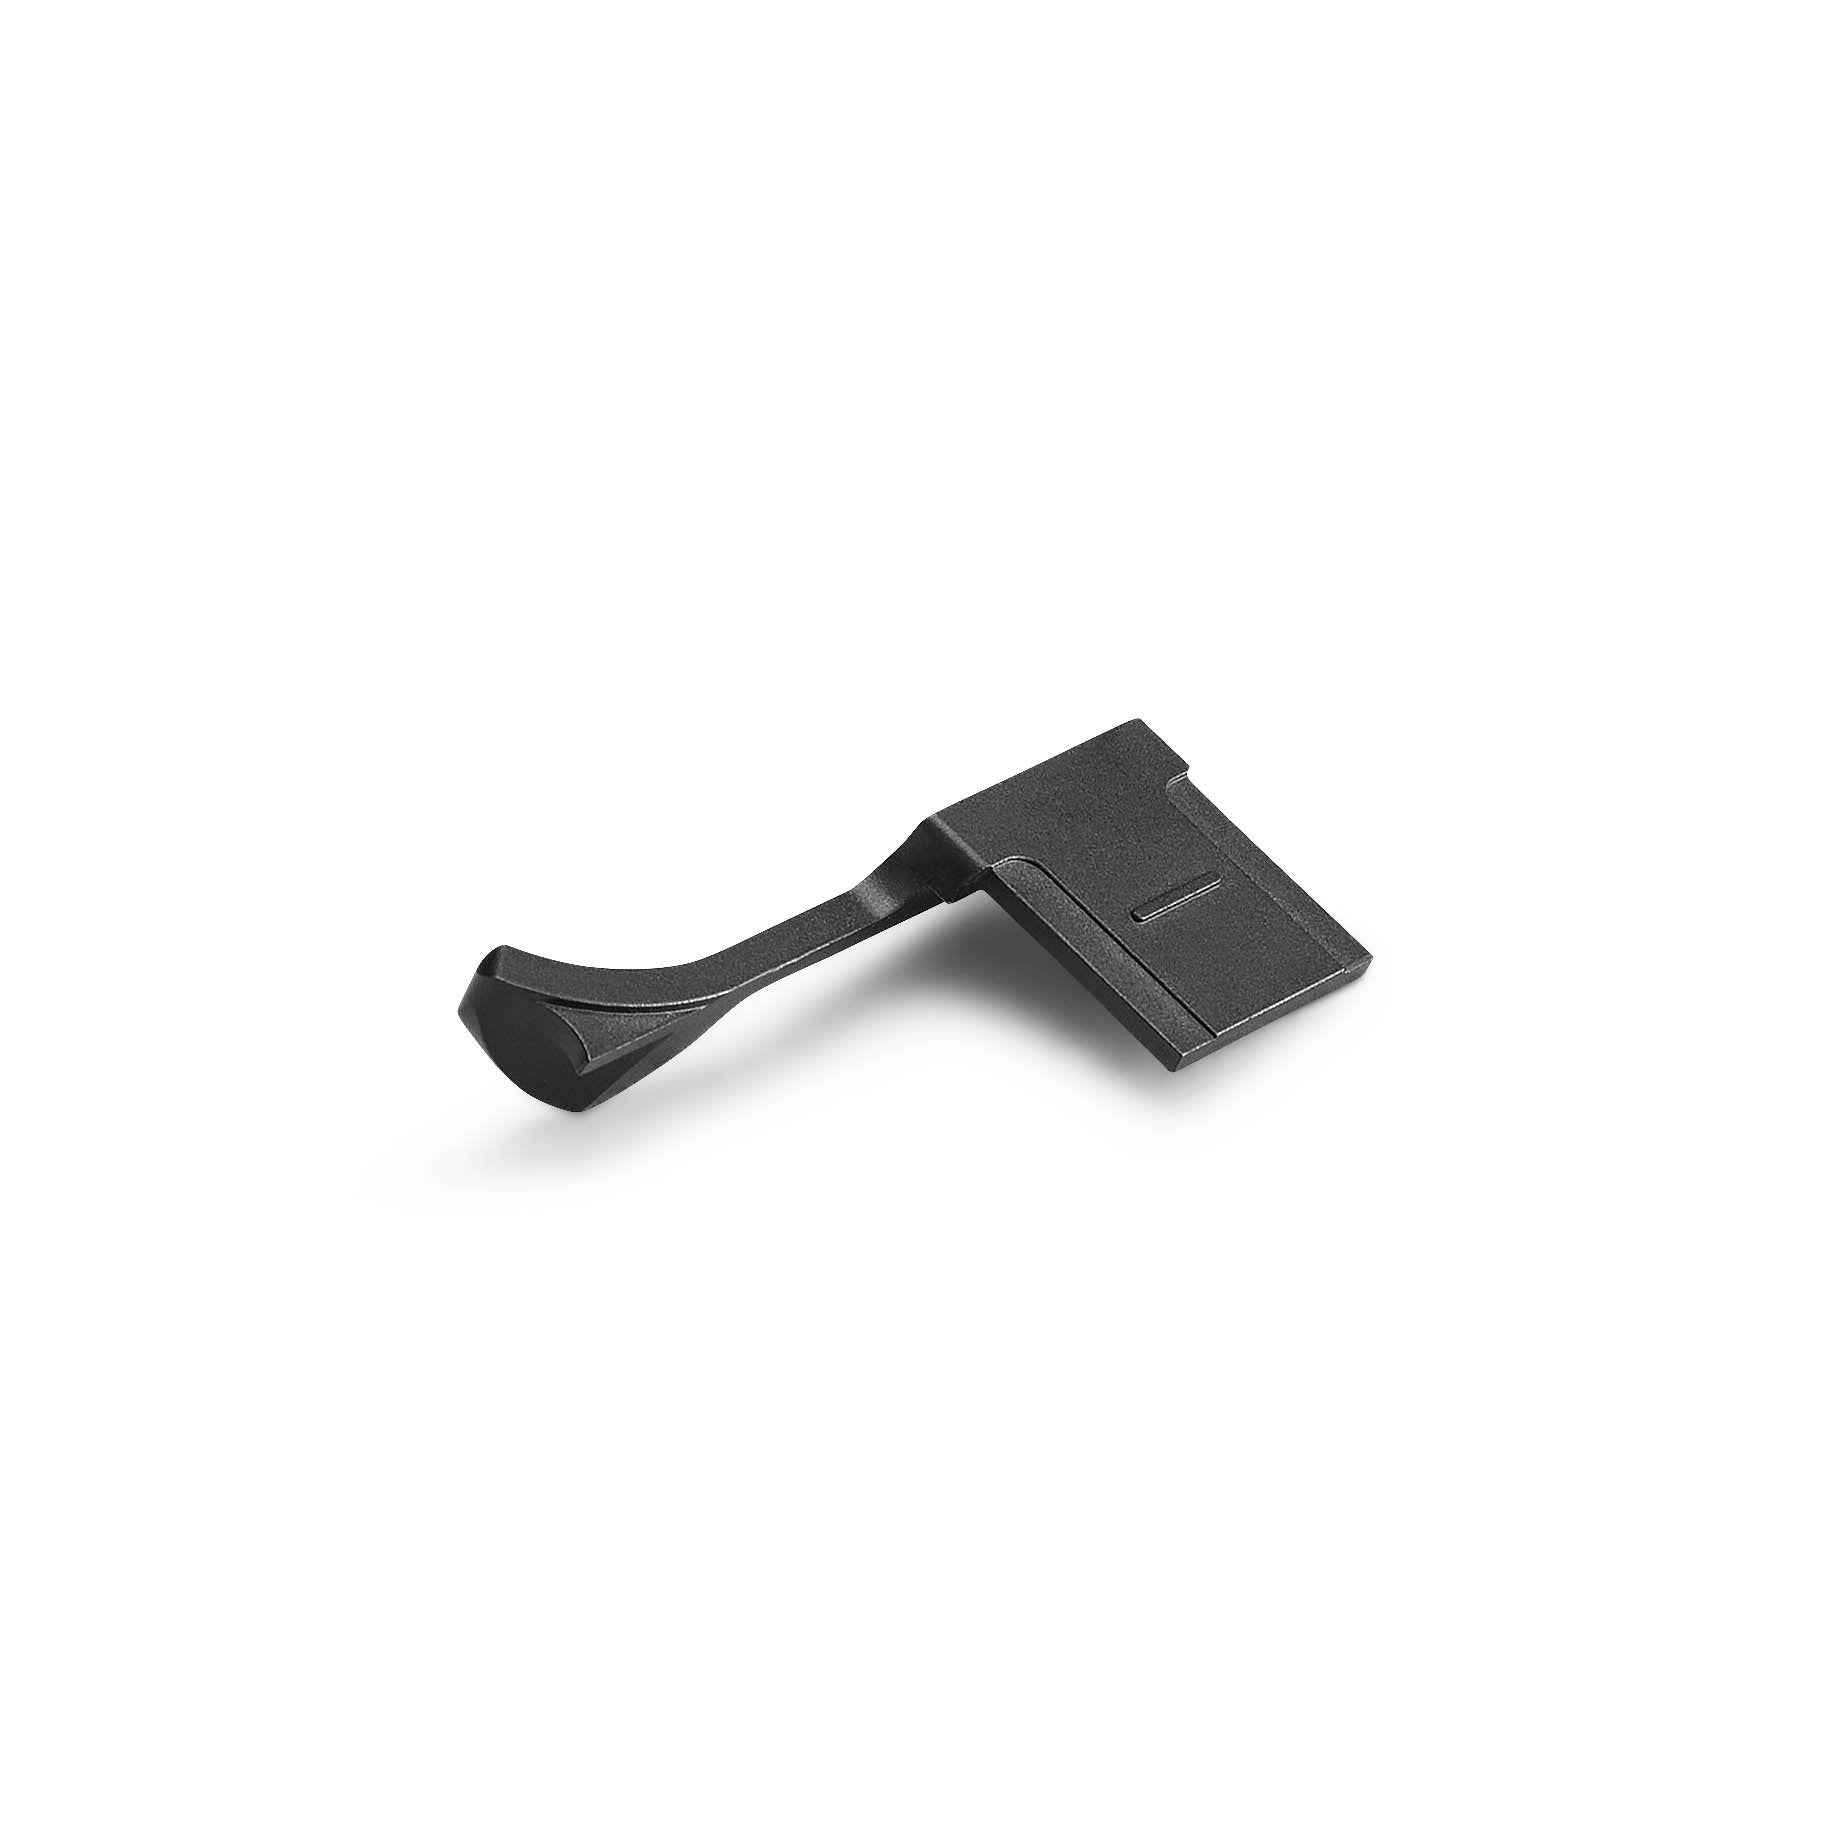 SquareHood Thumb Grip for Fuji X100V – The Usual